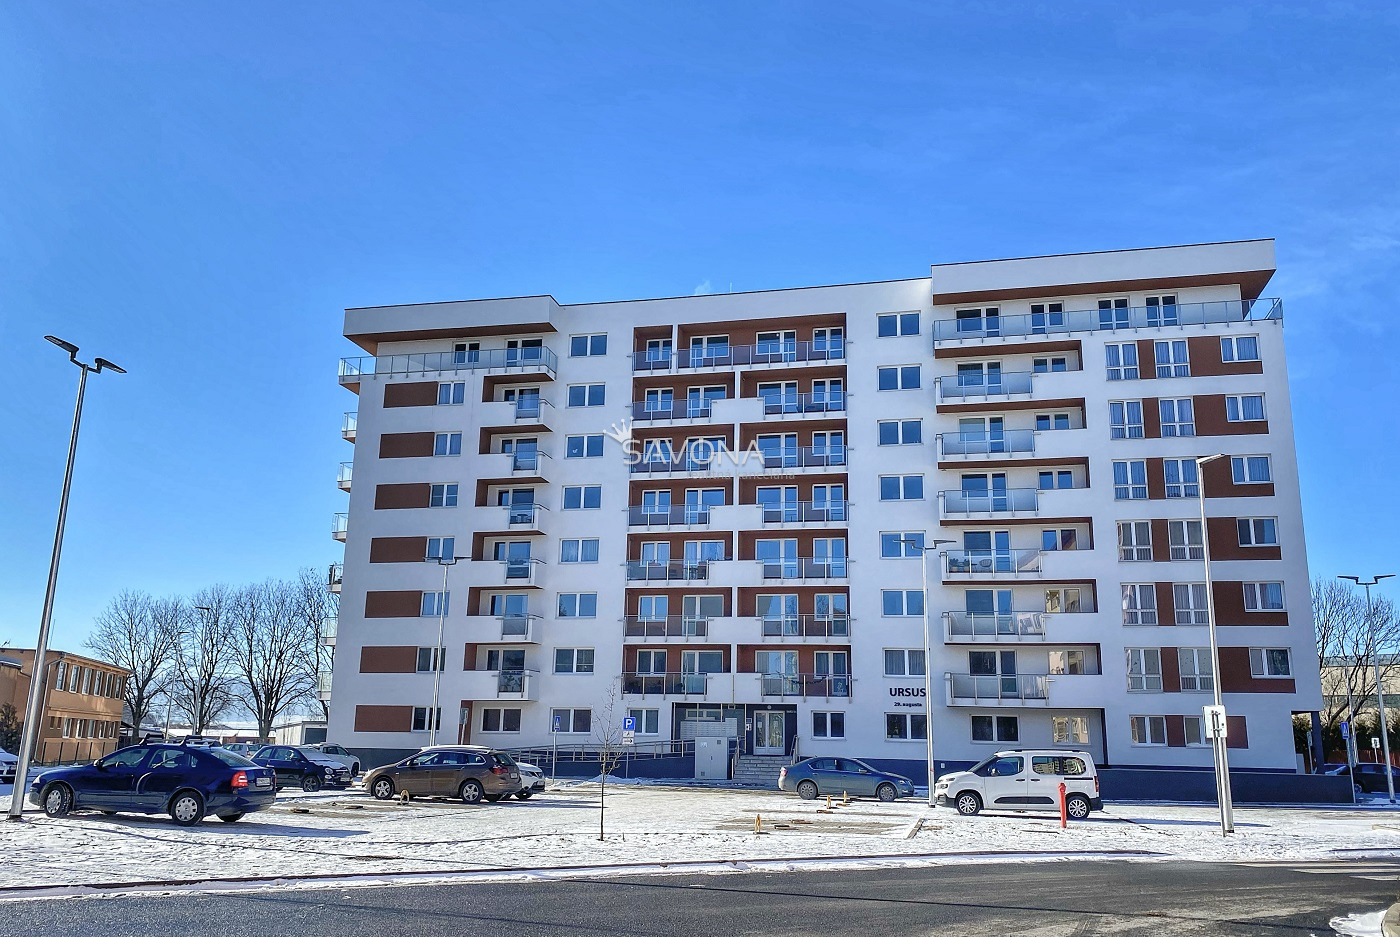 PRENAJATÝ - 3 izbový byt v novostavbe – v URSUSE s parkovacím státím, sídlisko Západ, POPRAD